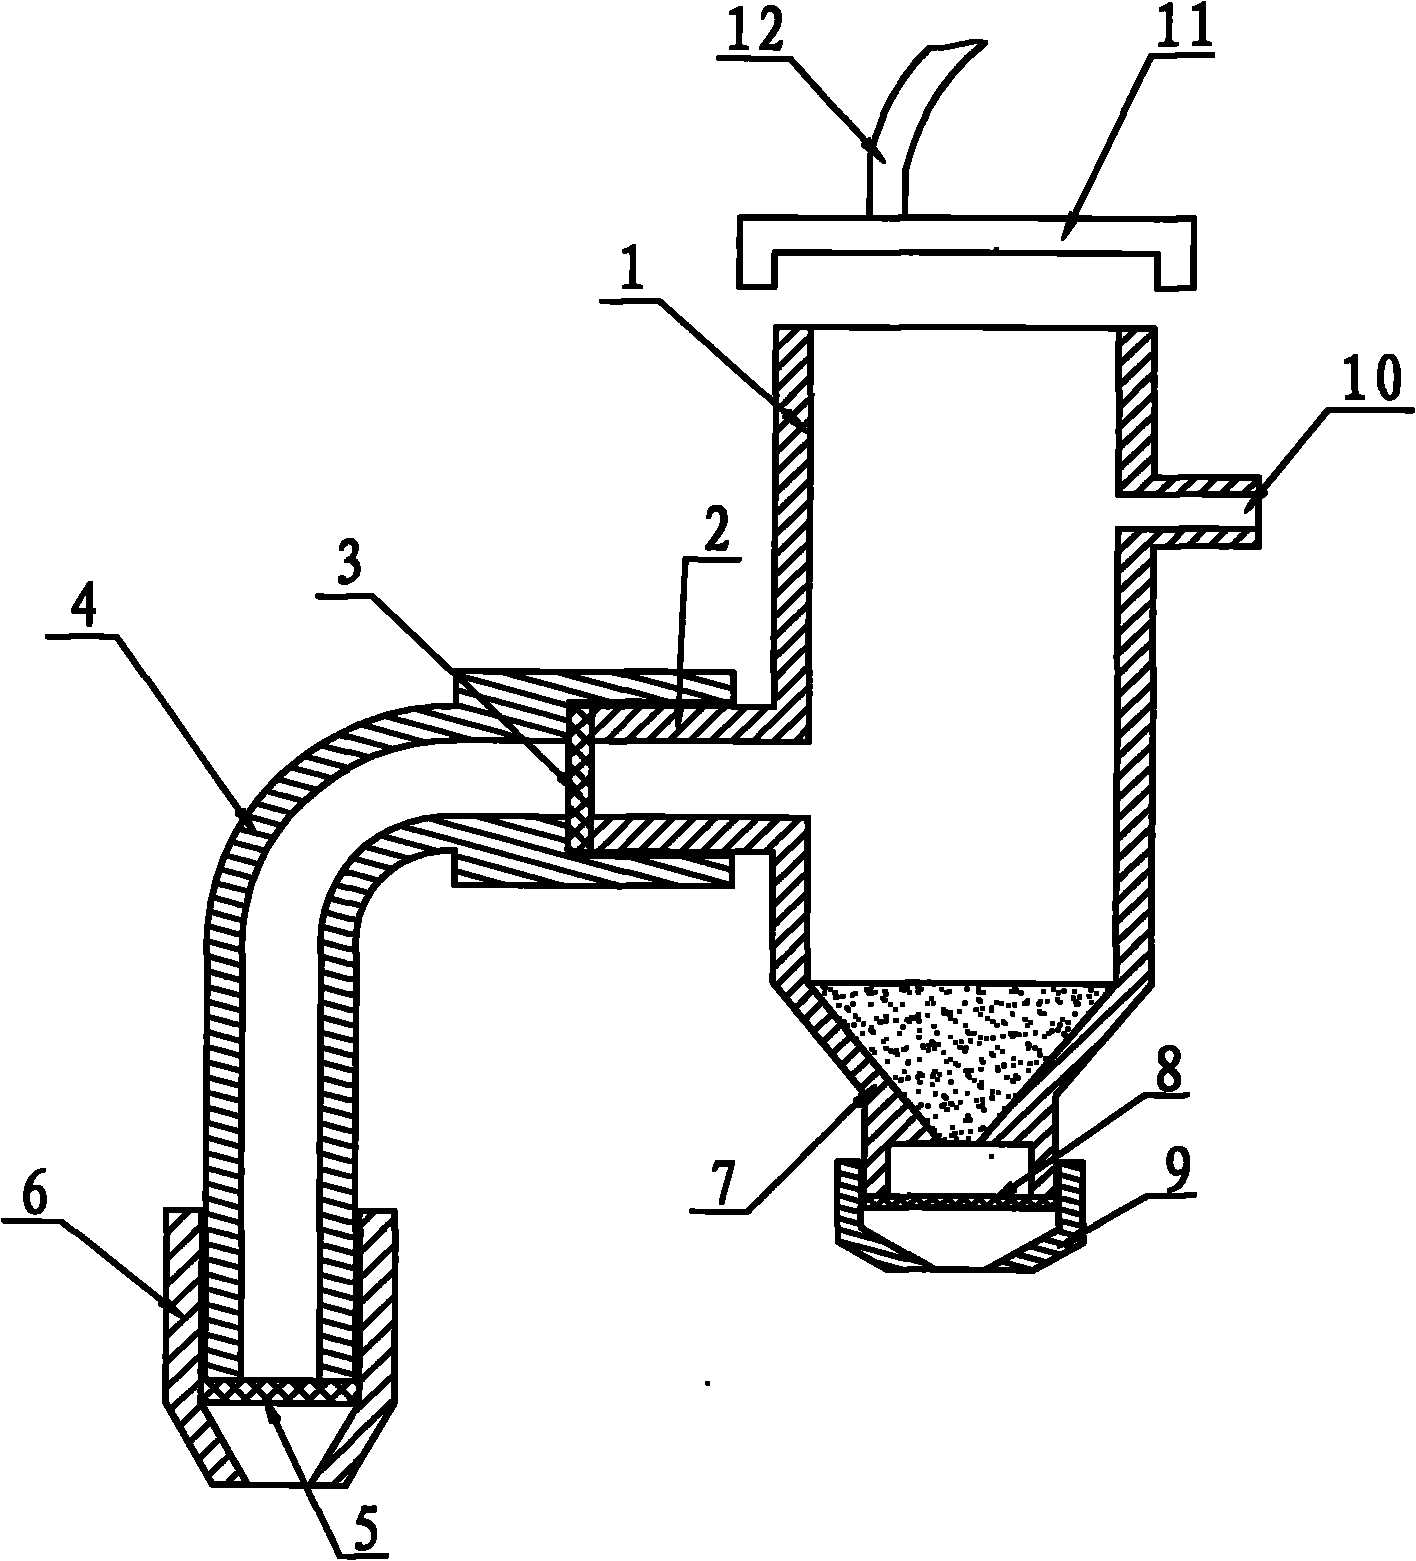 Liquid lubricating oil filtering device